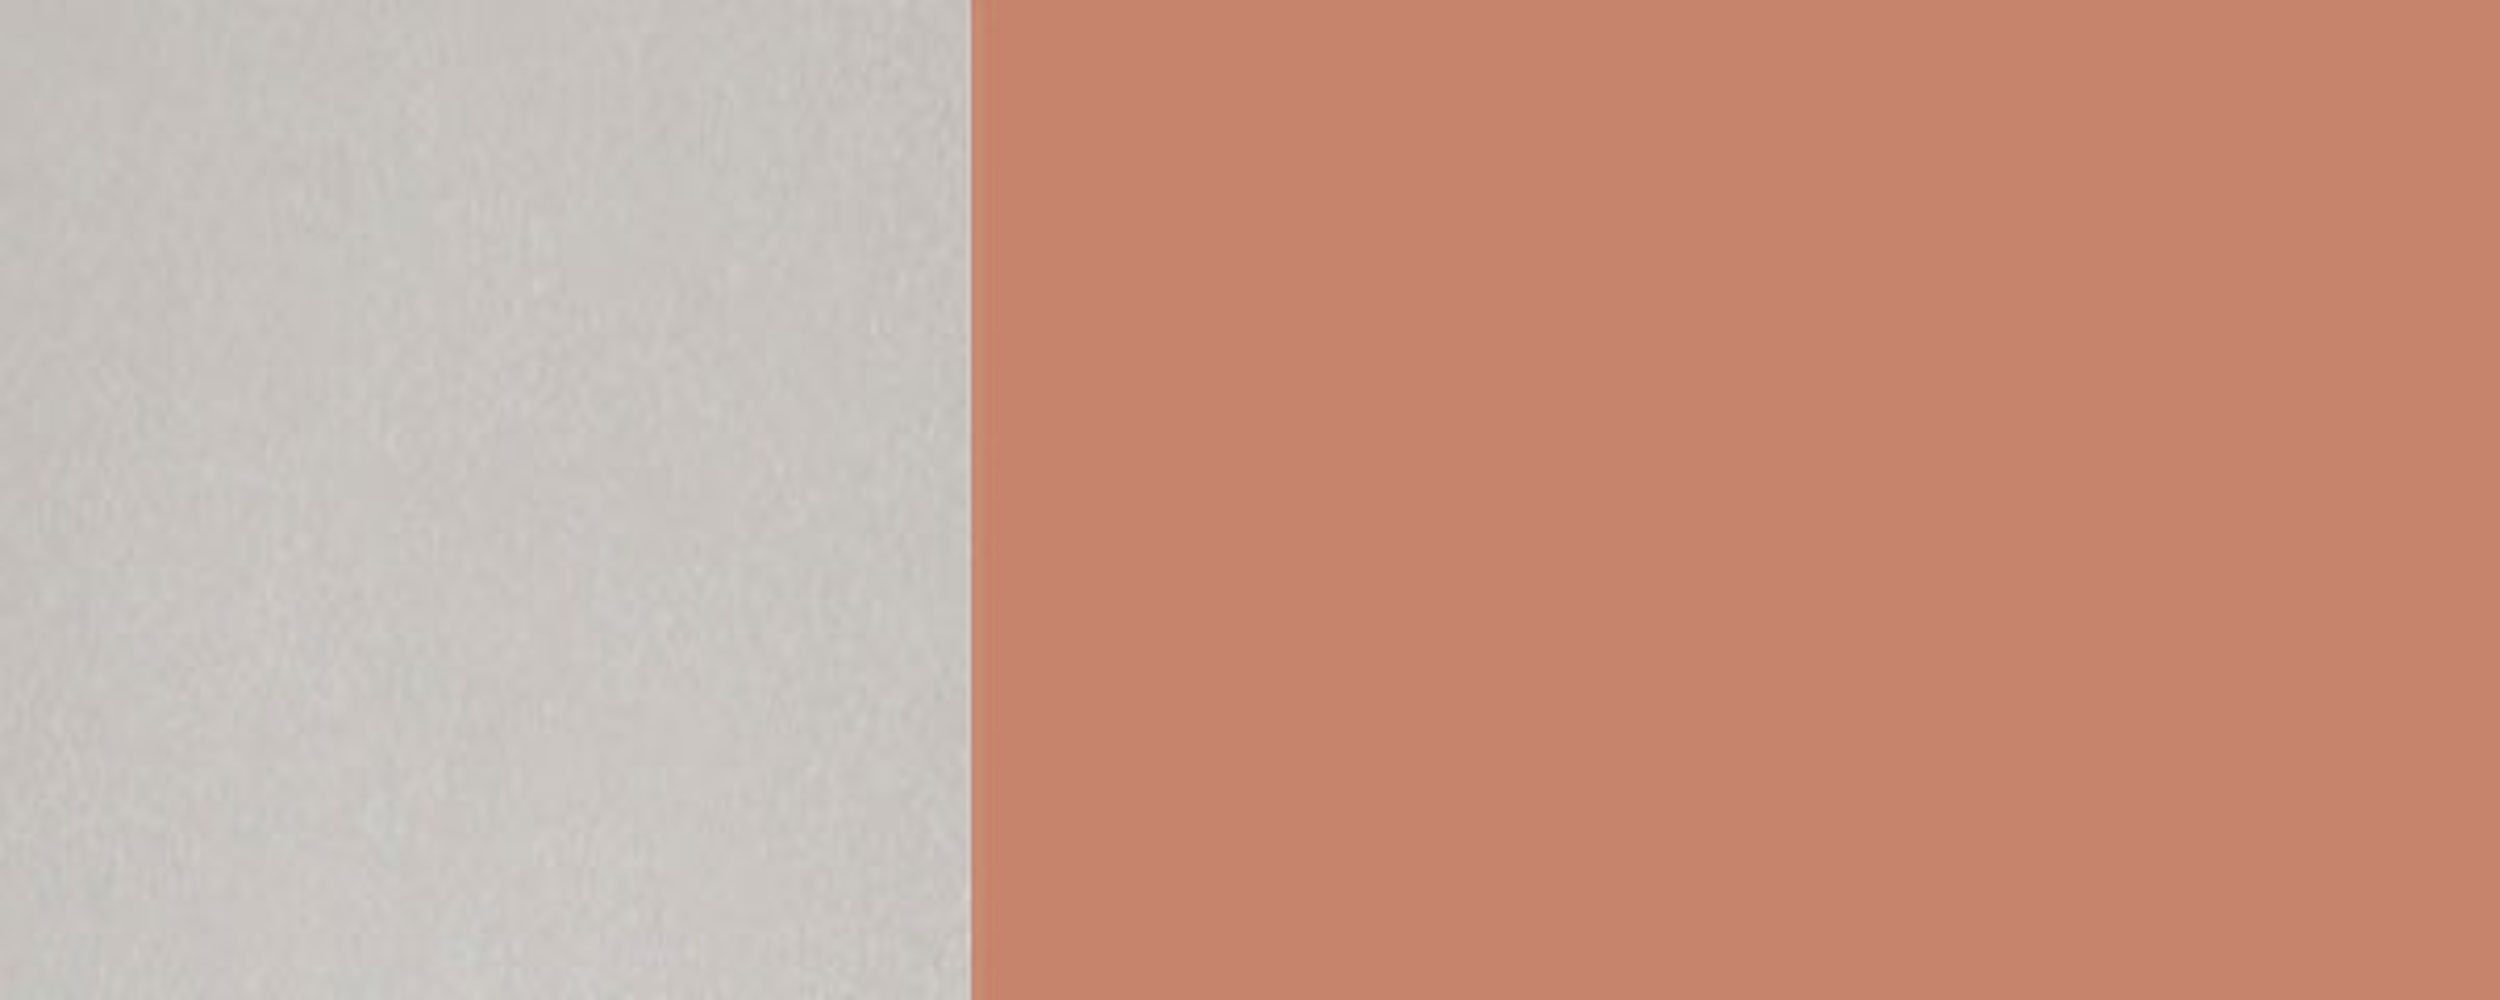 Front- matt Sockelfarbe Feldmann-Wohnen vollintegriert Sockelblende Tivoli, 45cm RAL 3012 beigerot wählbar und